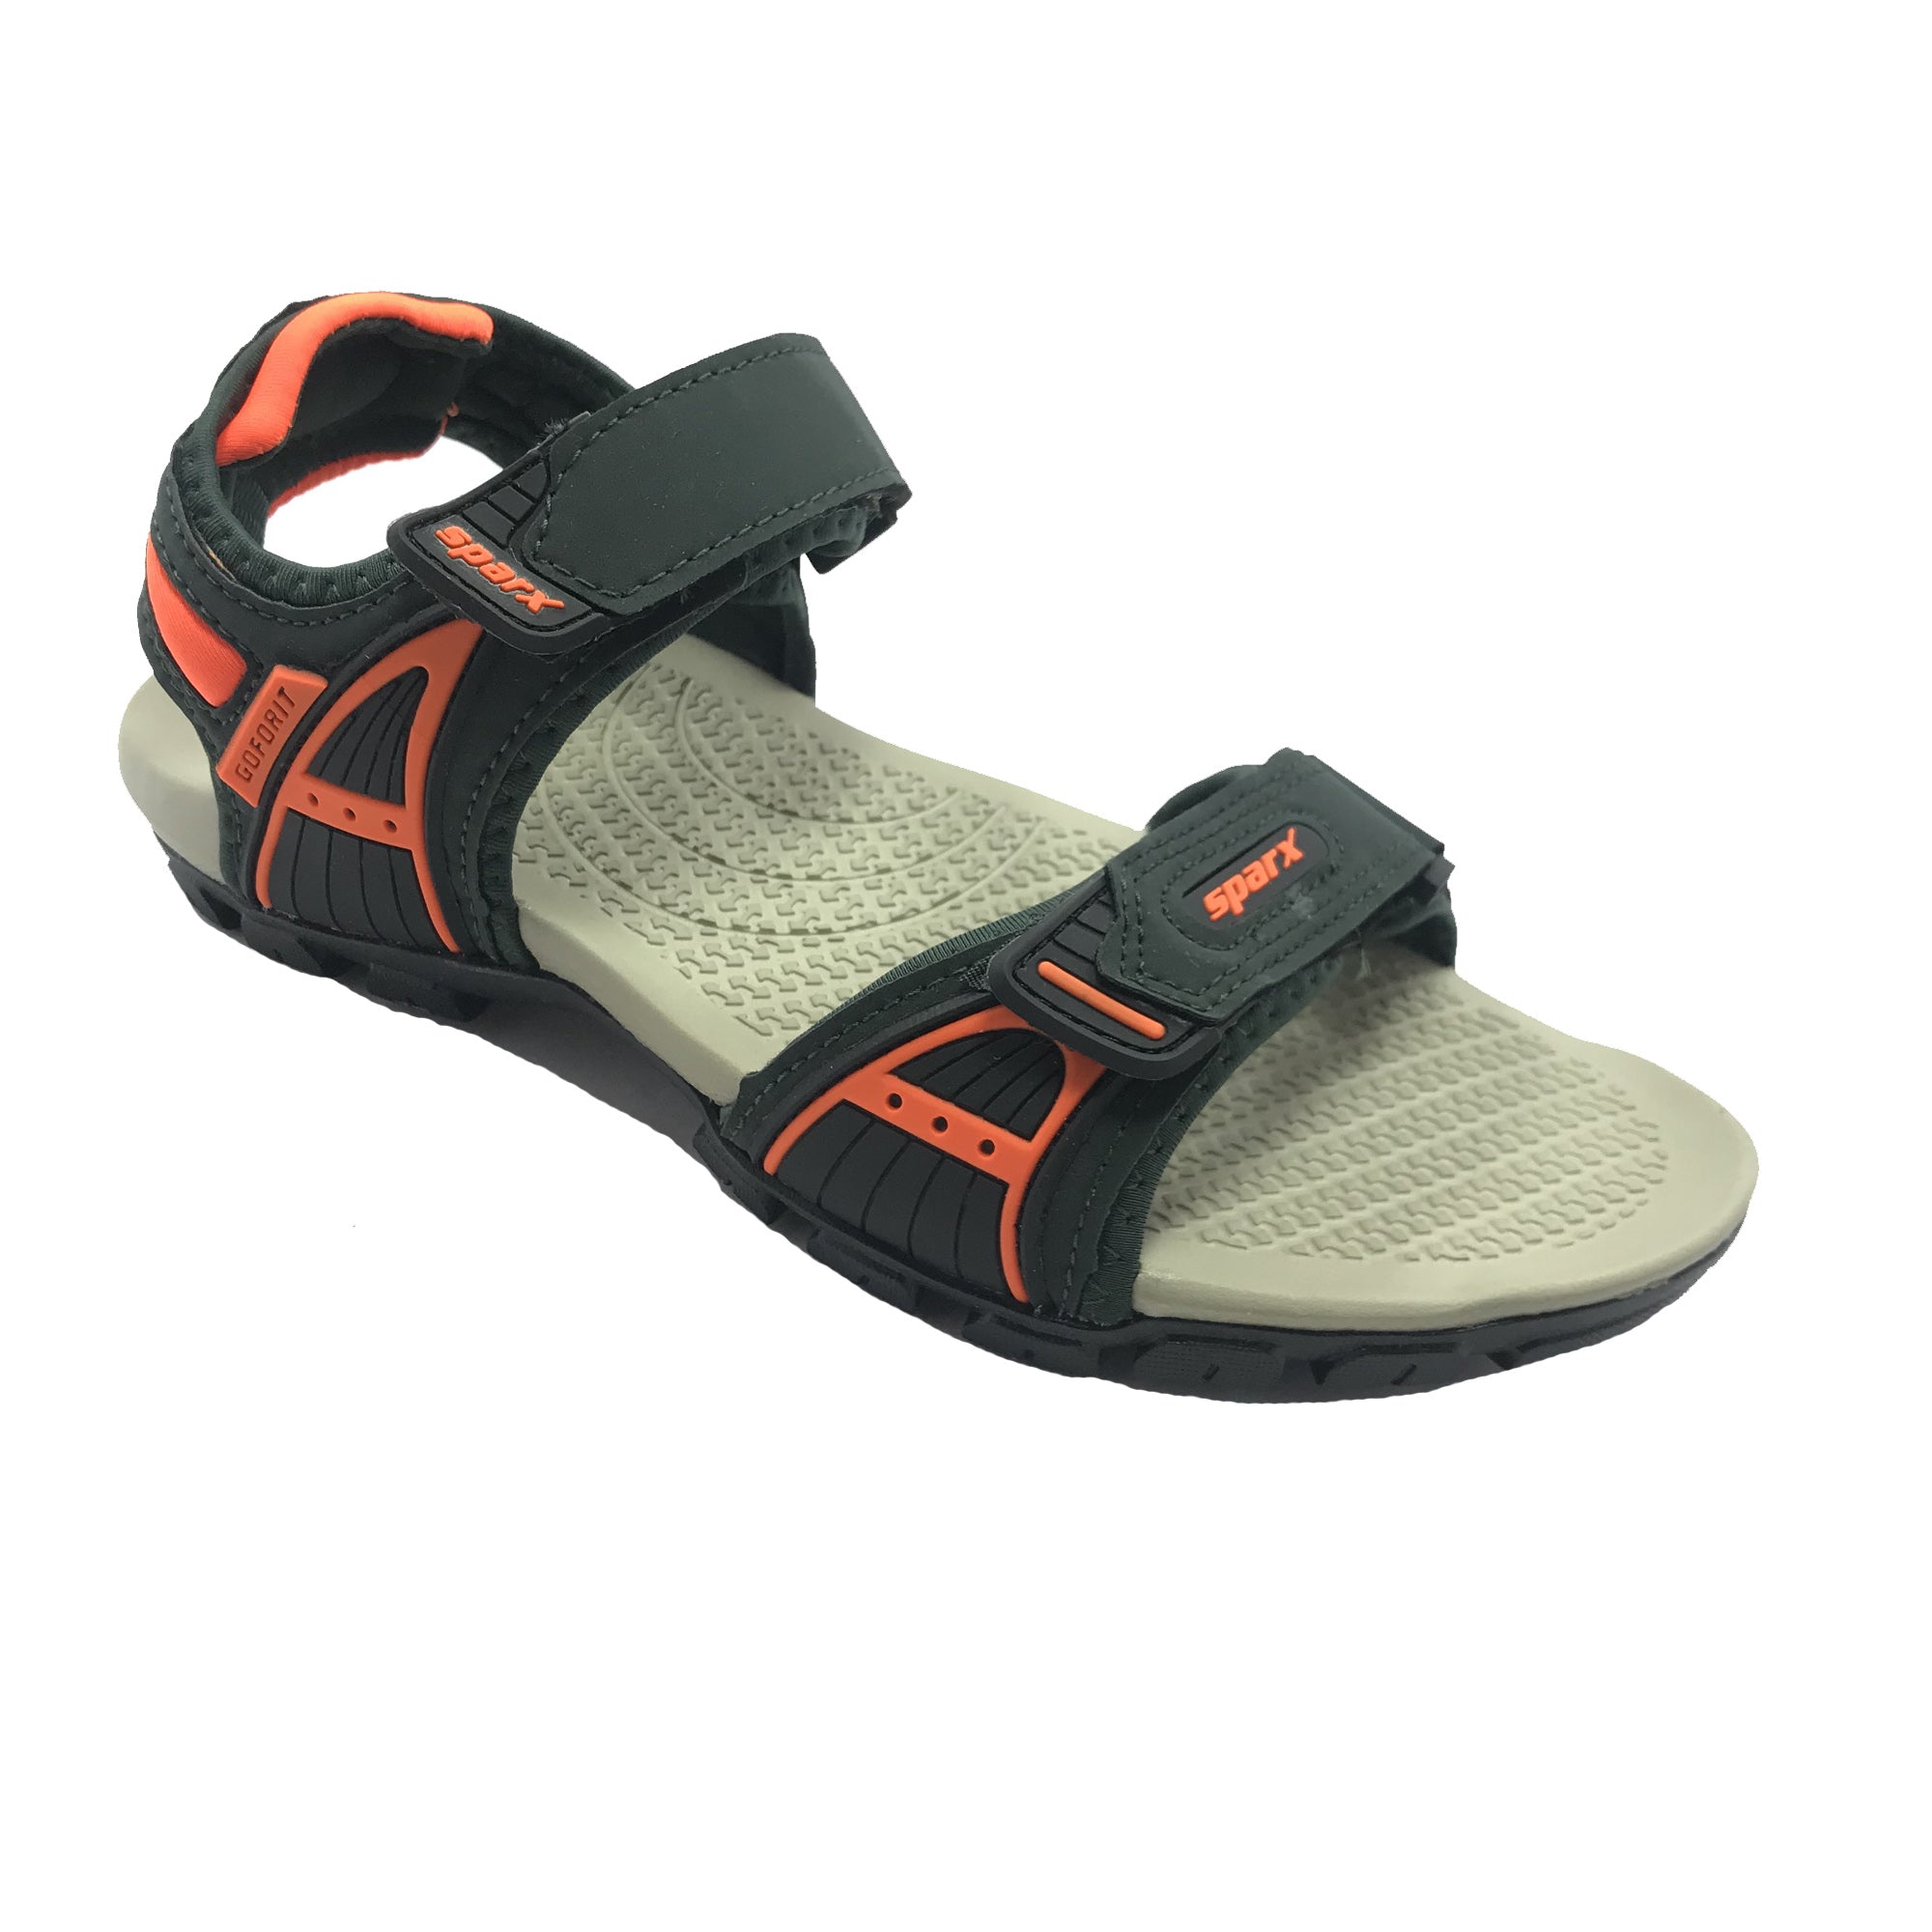 Sparx ss805 sandal